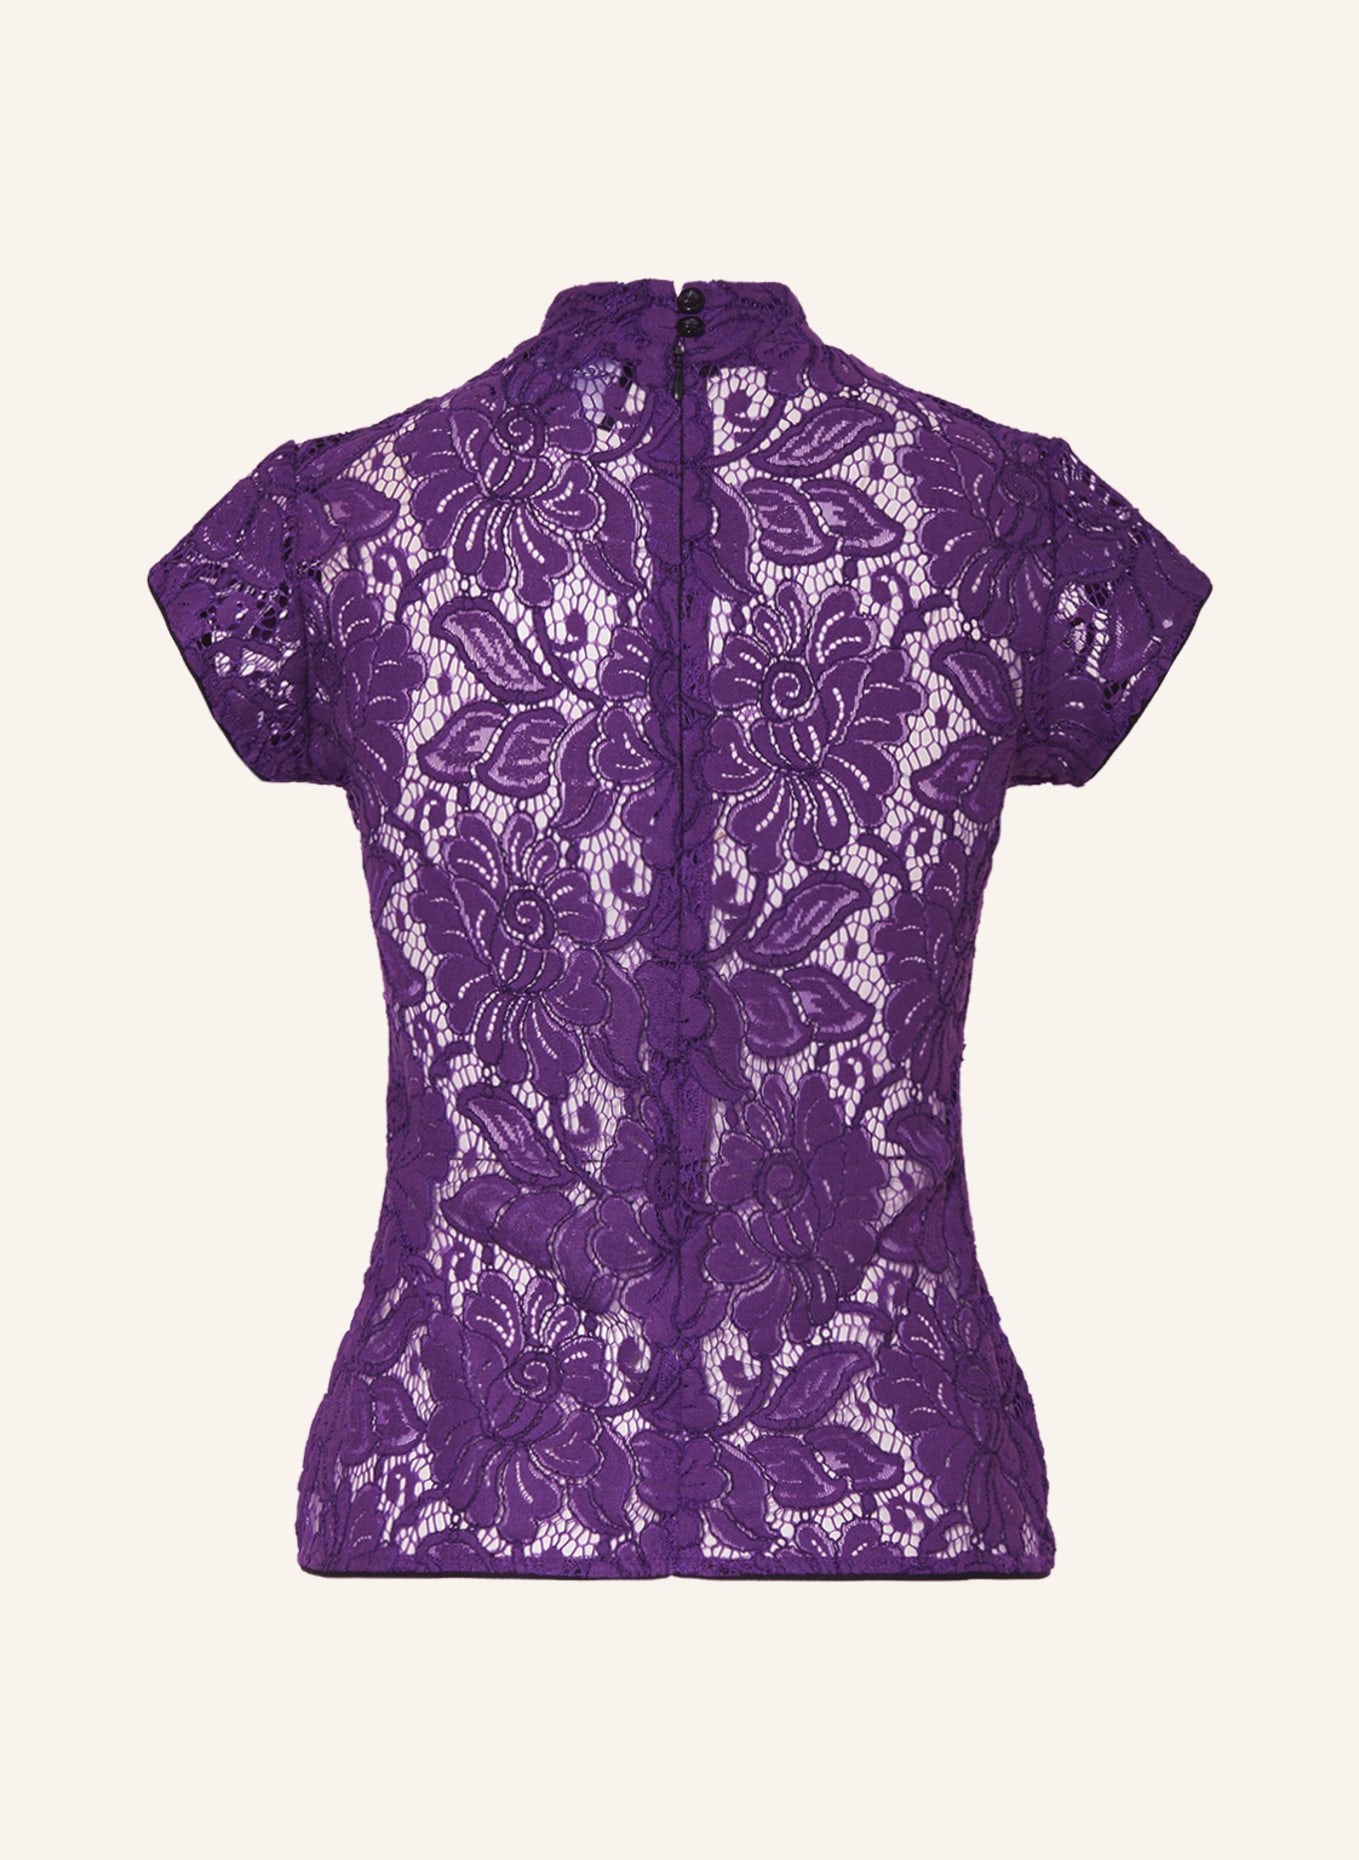 KINGA MATHE Trachten blouse CHARLOTTE made of lace, Color: PURPLE (Image 2)